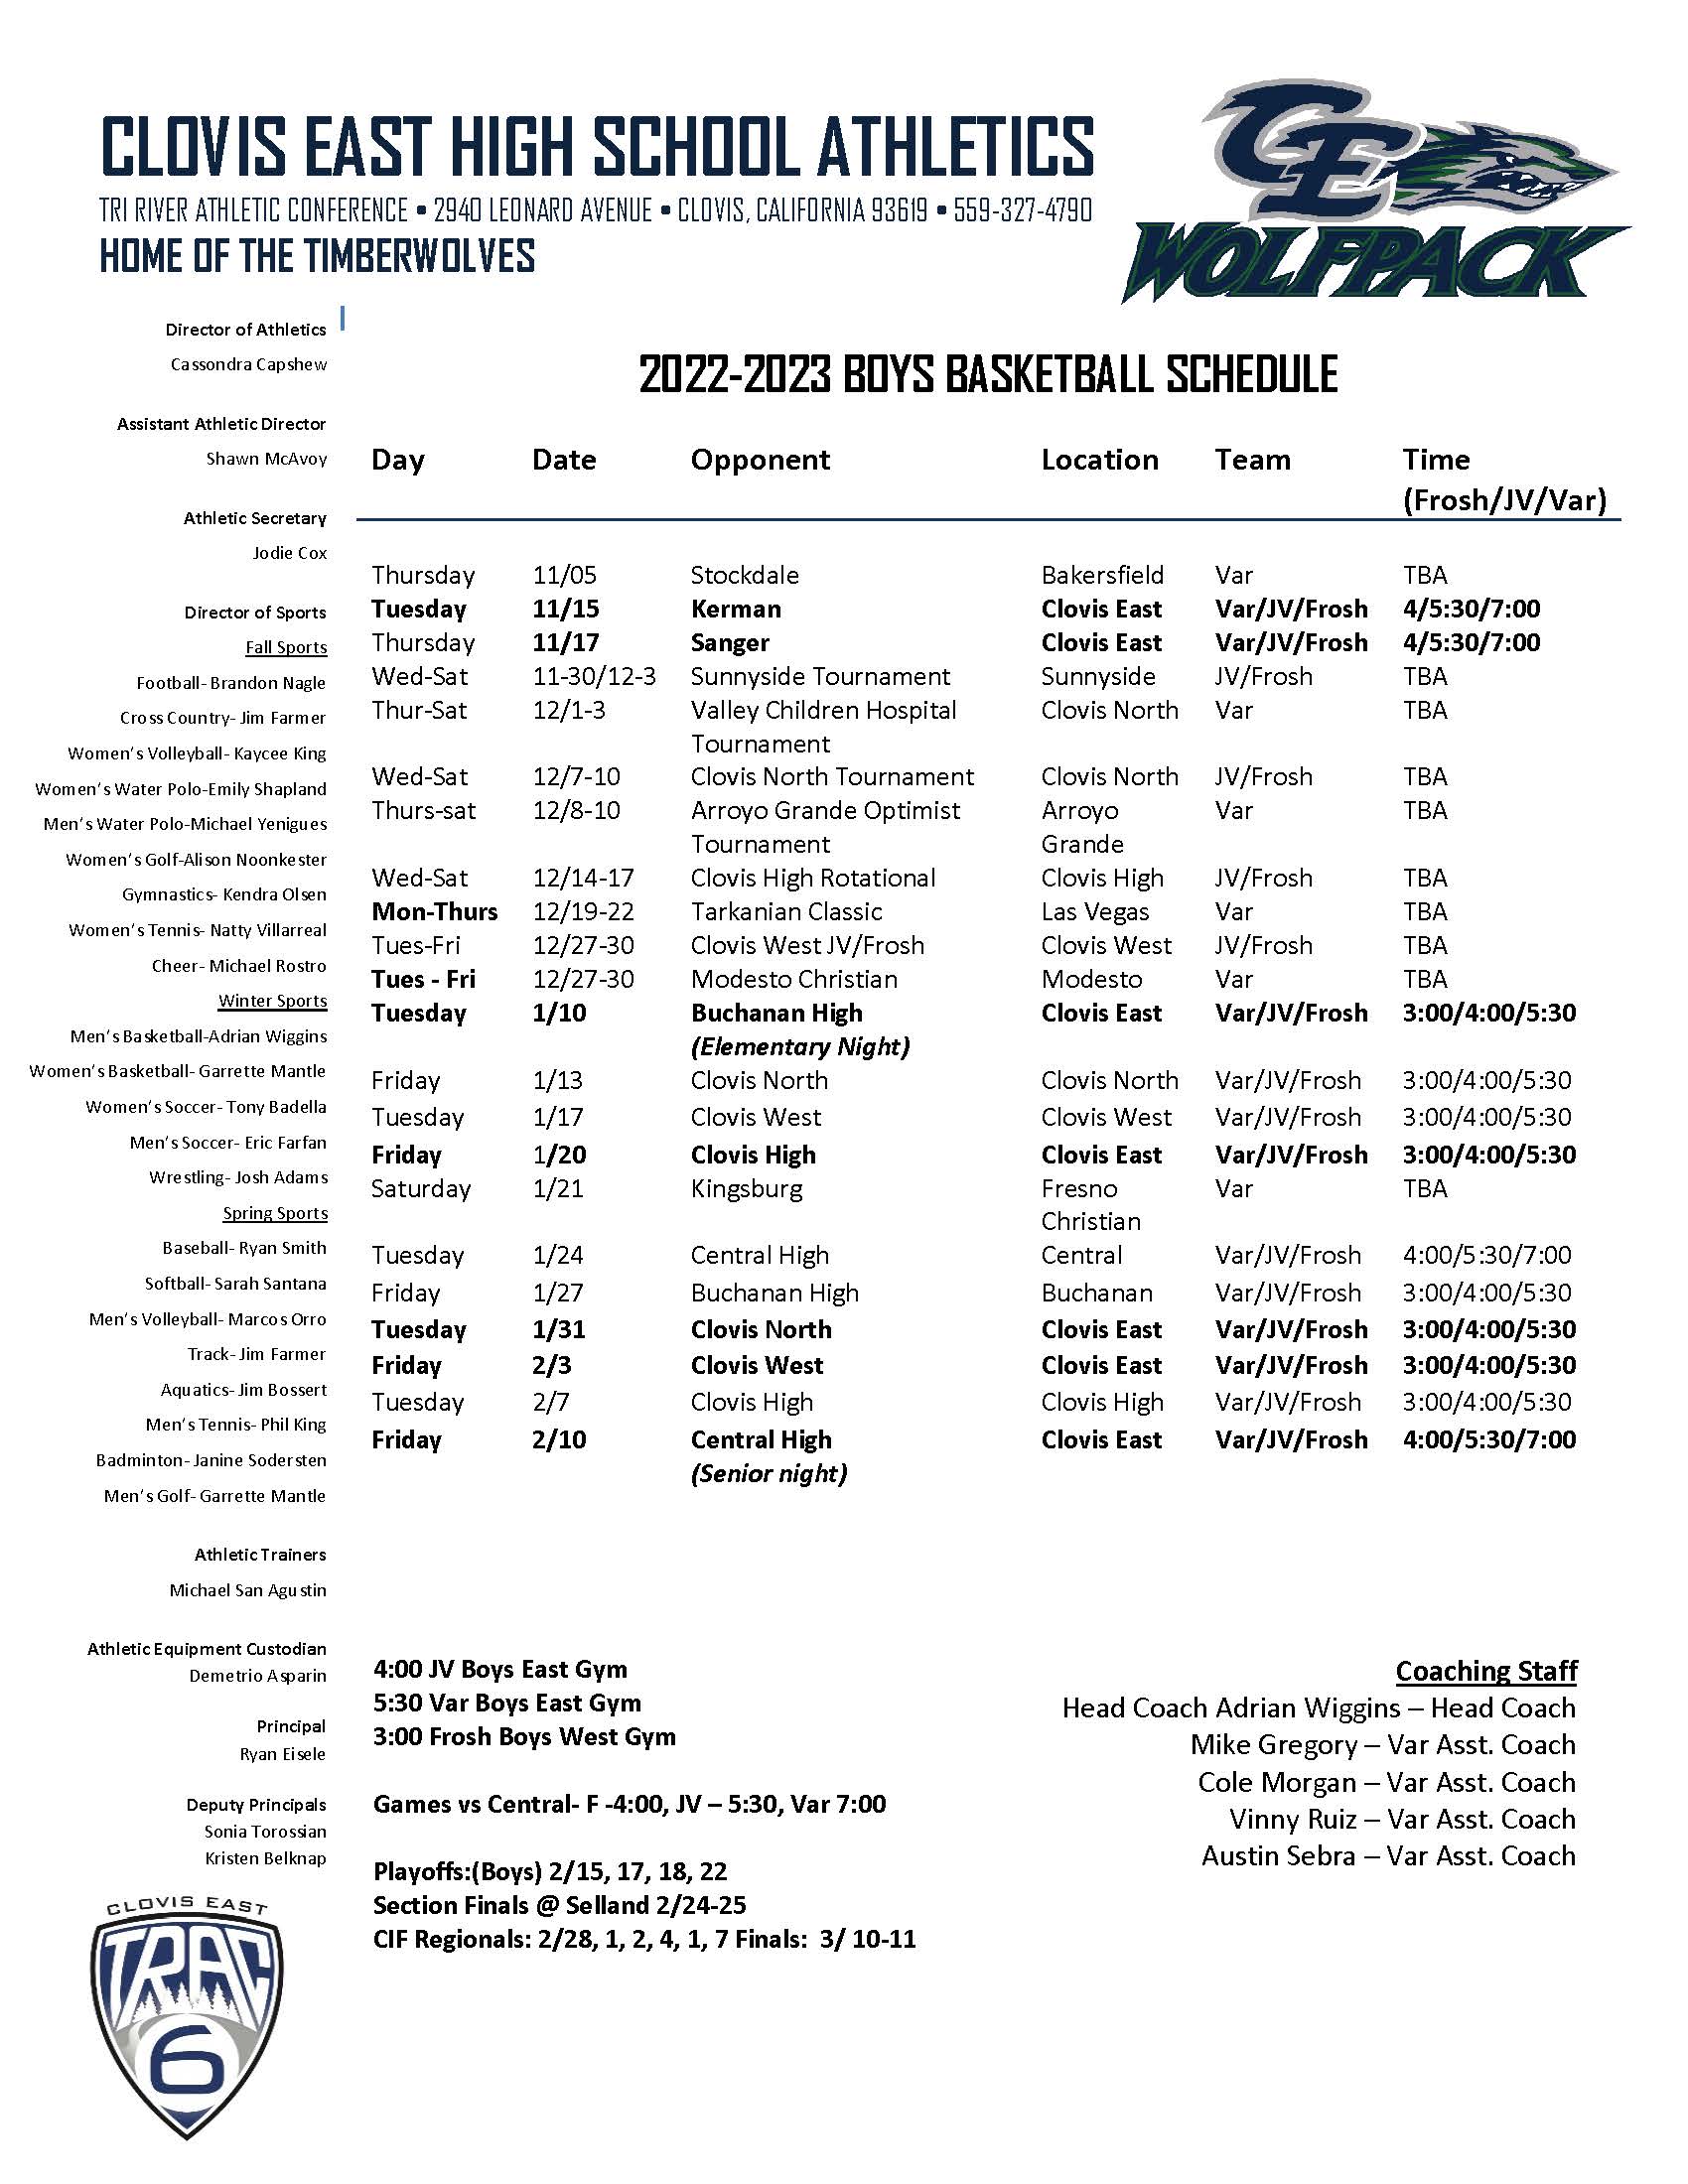 22-23 boys basketball schedule